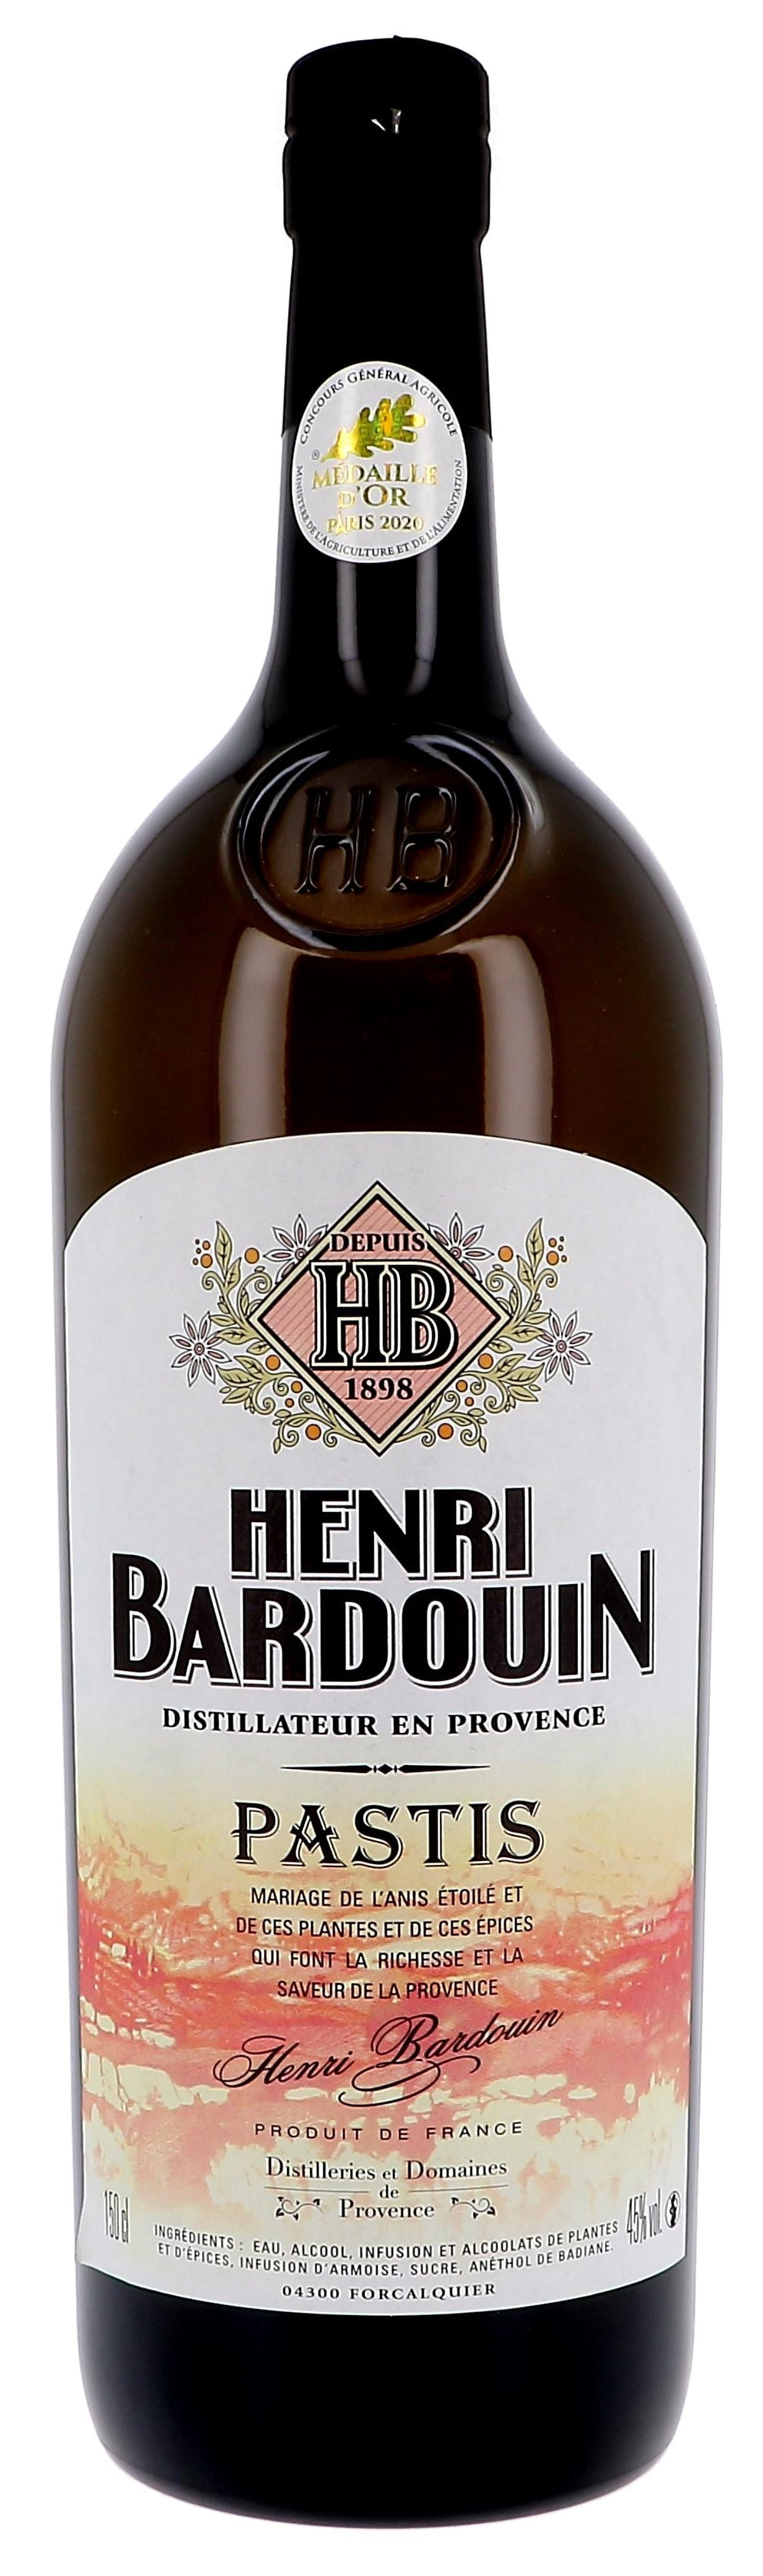 Pastis Henri Bardouin 70cl 45% (Anijs & Pastis)